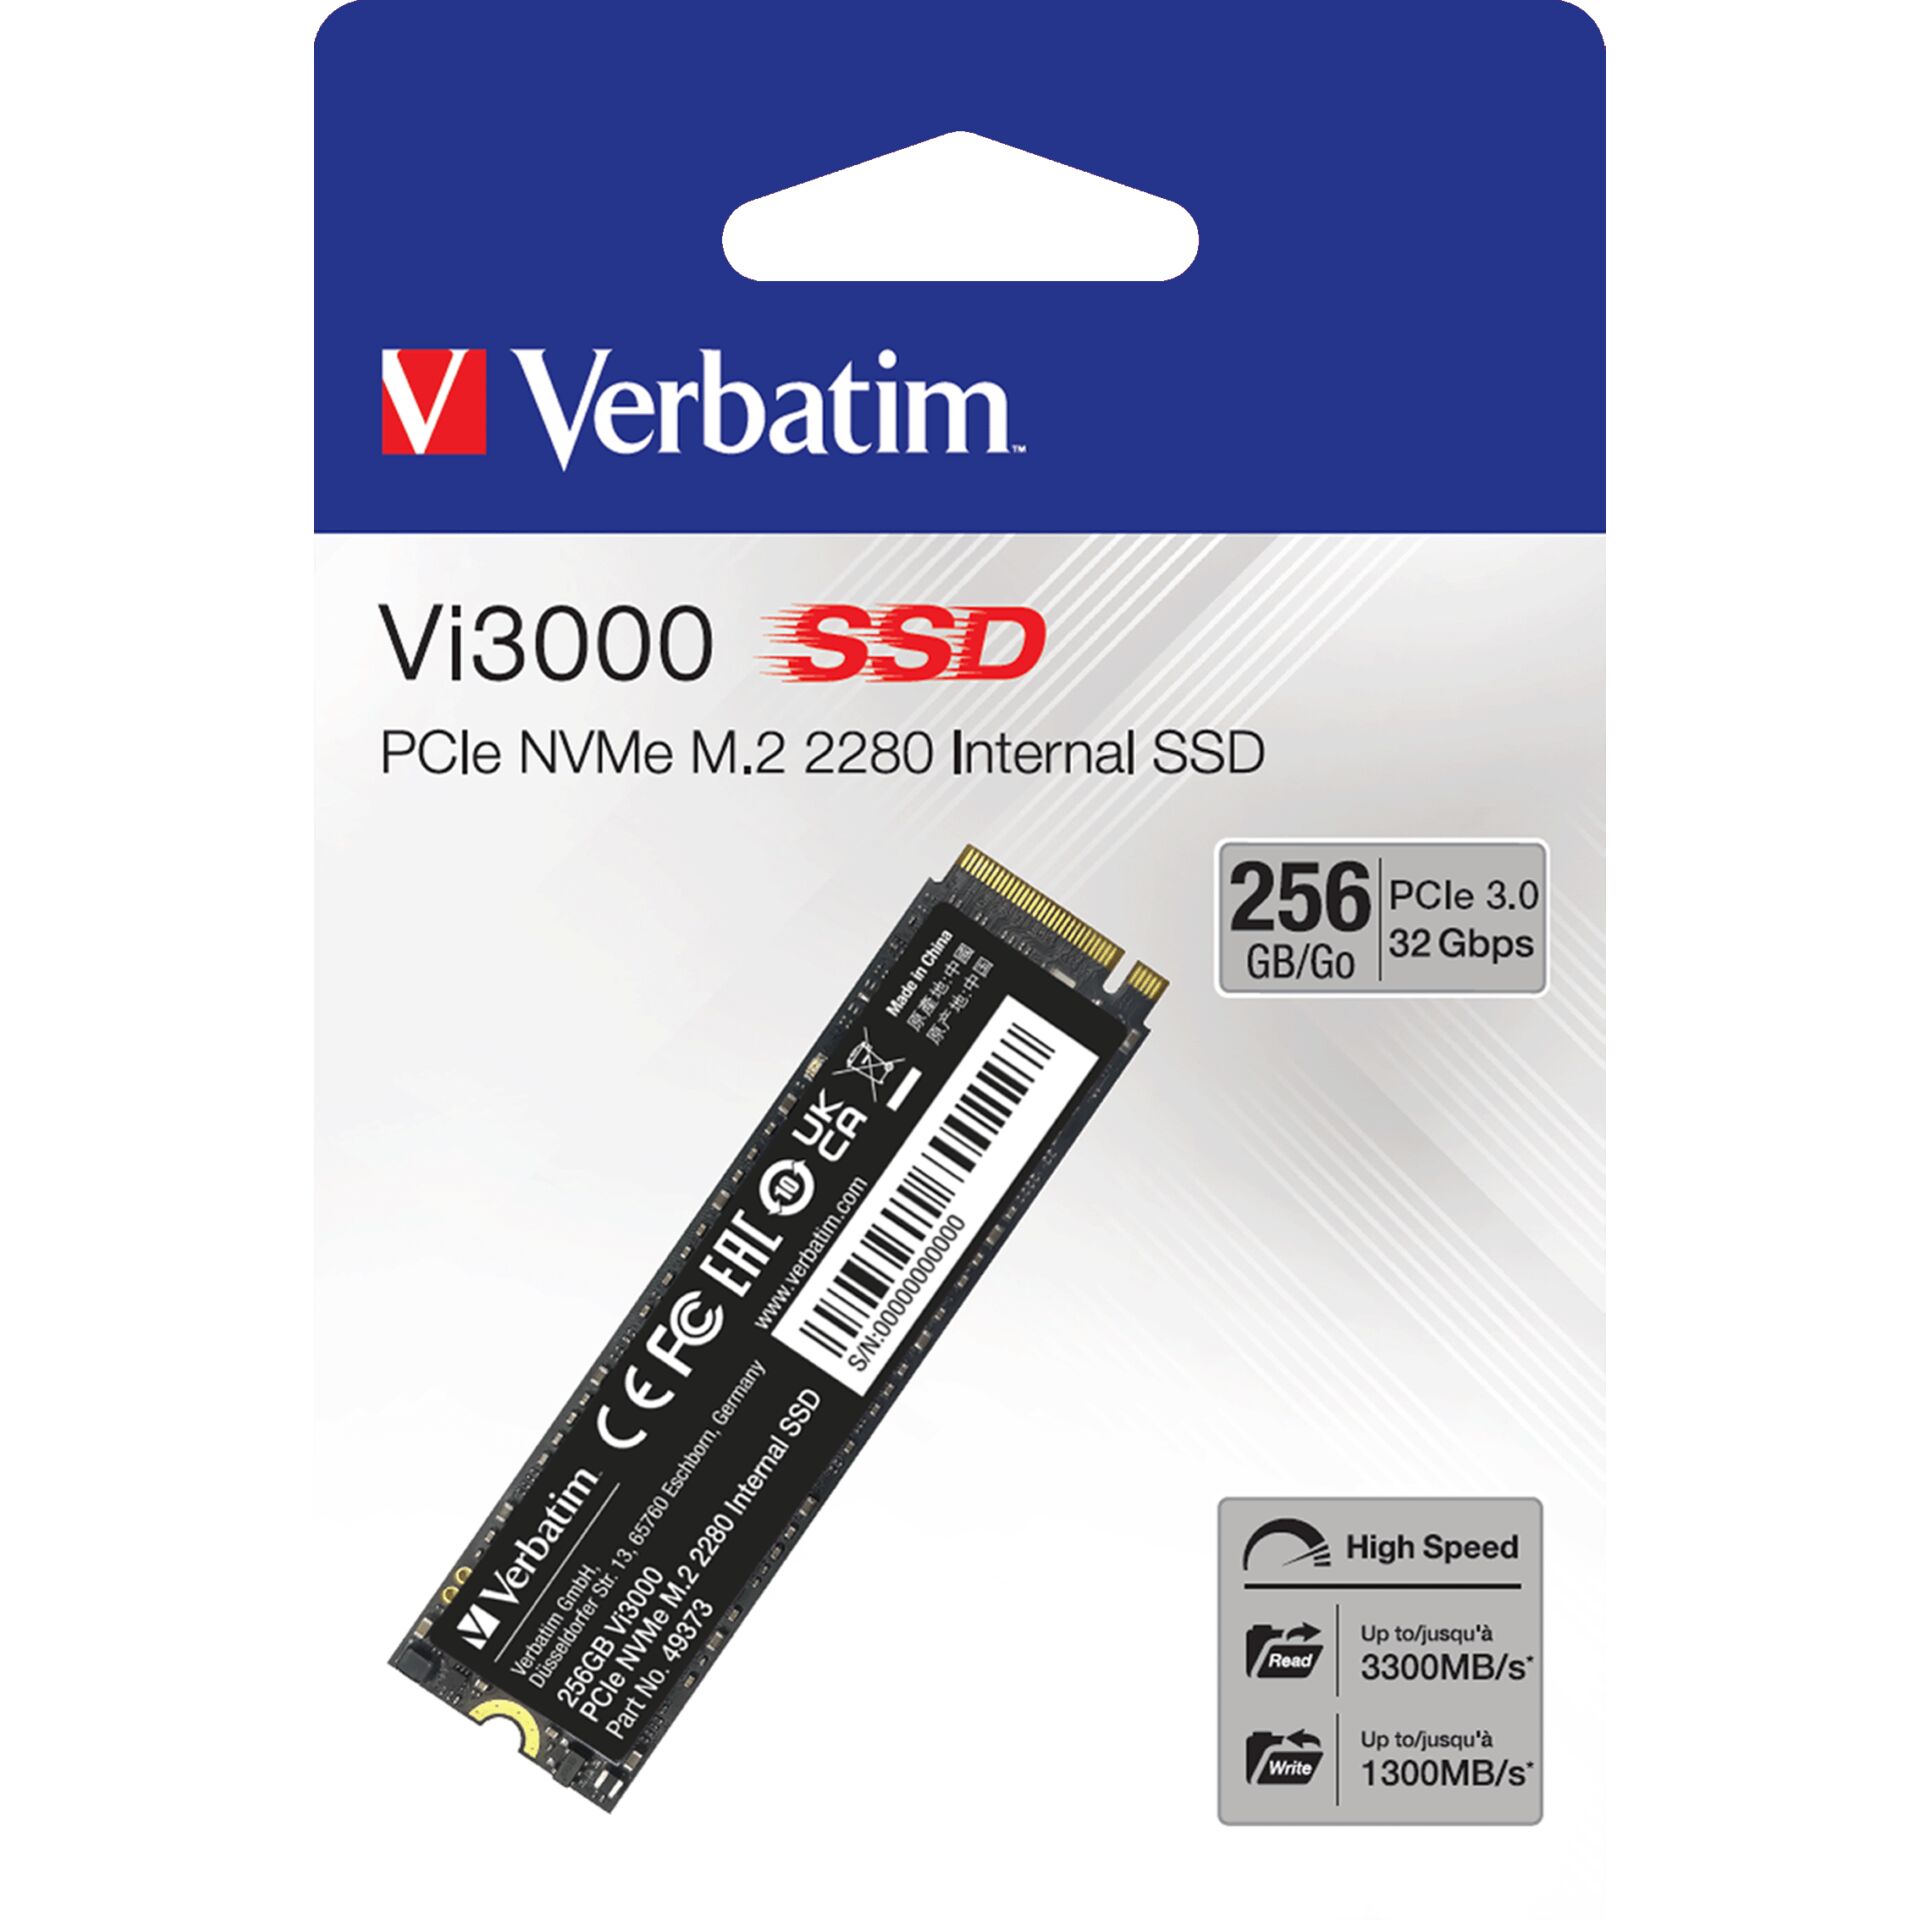 Verbatim Vi3000 PCle NVMe M.2 SSD 256GB                  493